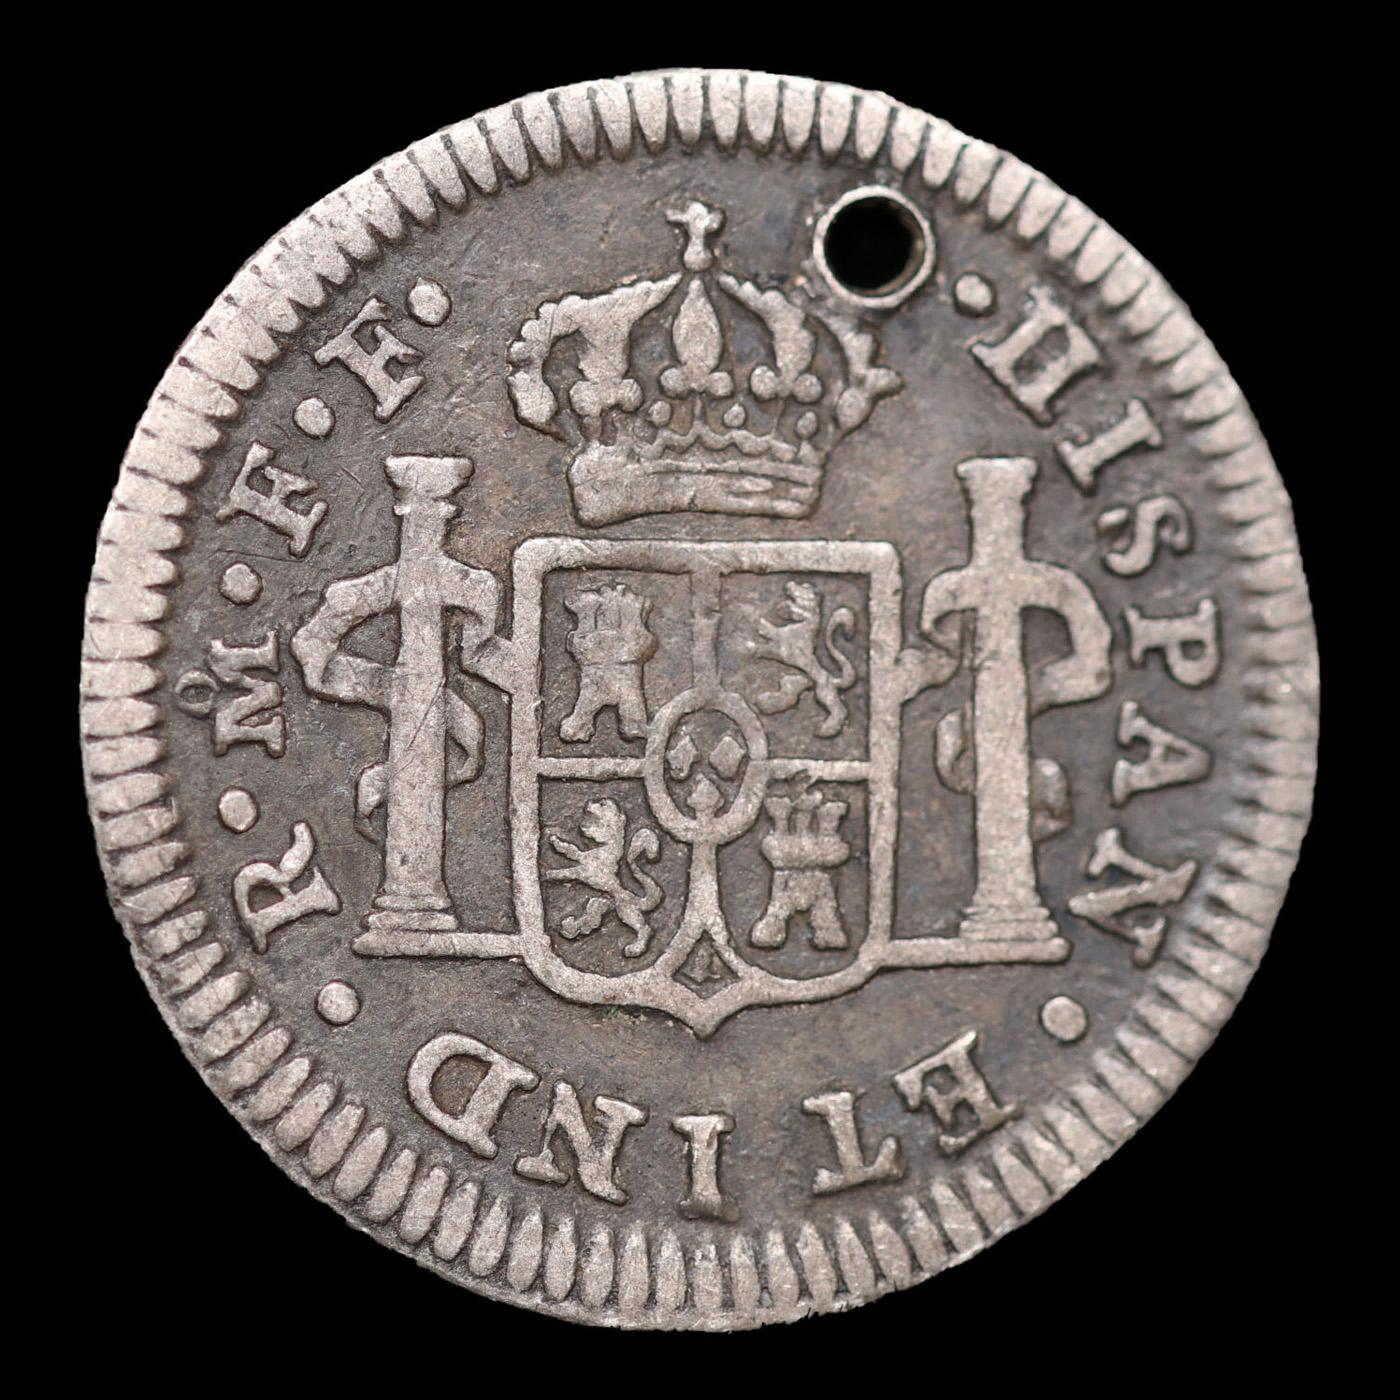 1783-M 1/2 Carlios III Spanish Reales Grades vf details